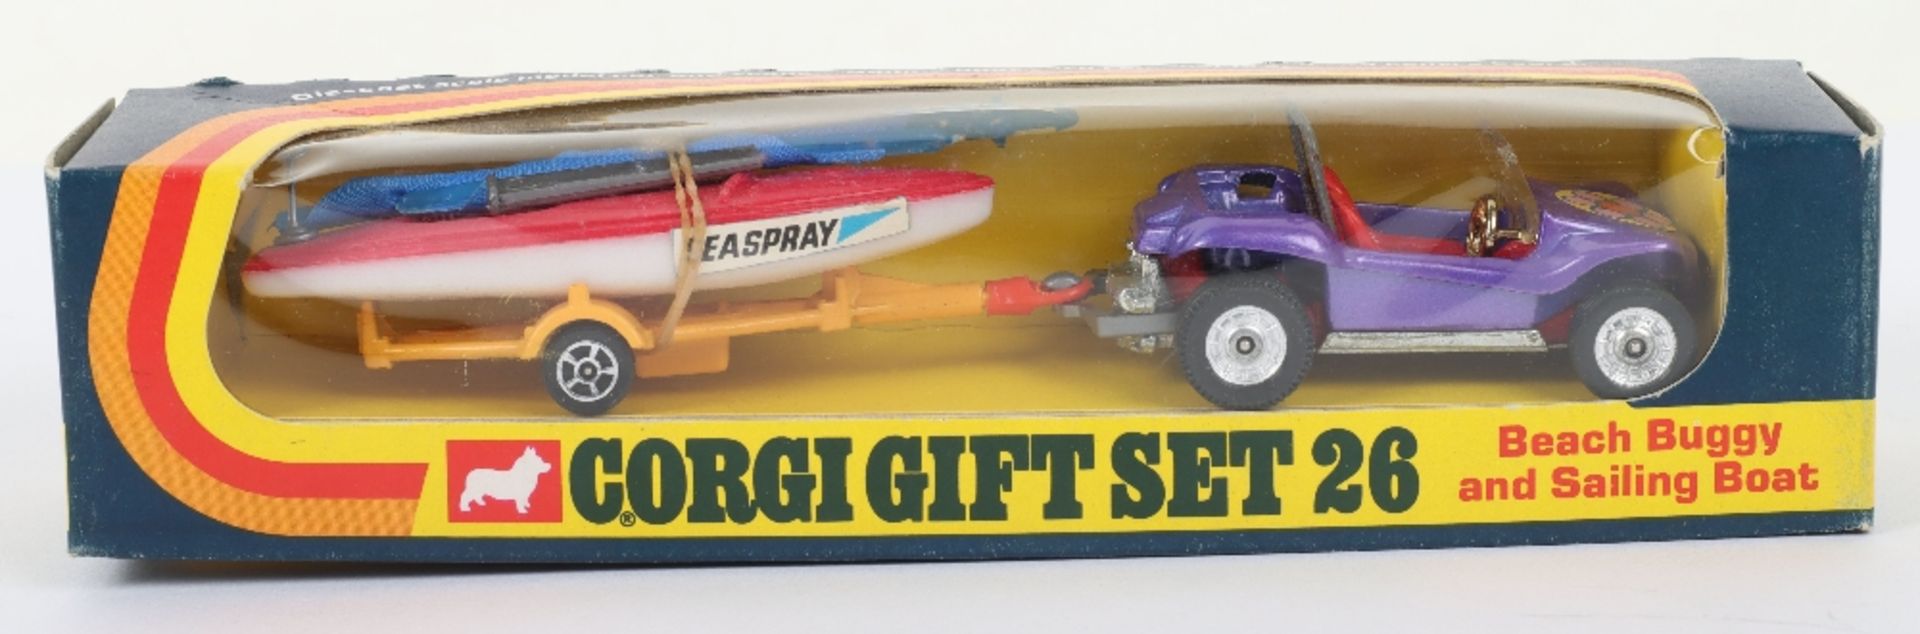 Corgi Toys Whizzwheels Models, Gift set 26 Beach buggy and sailing boat